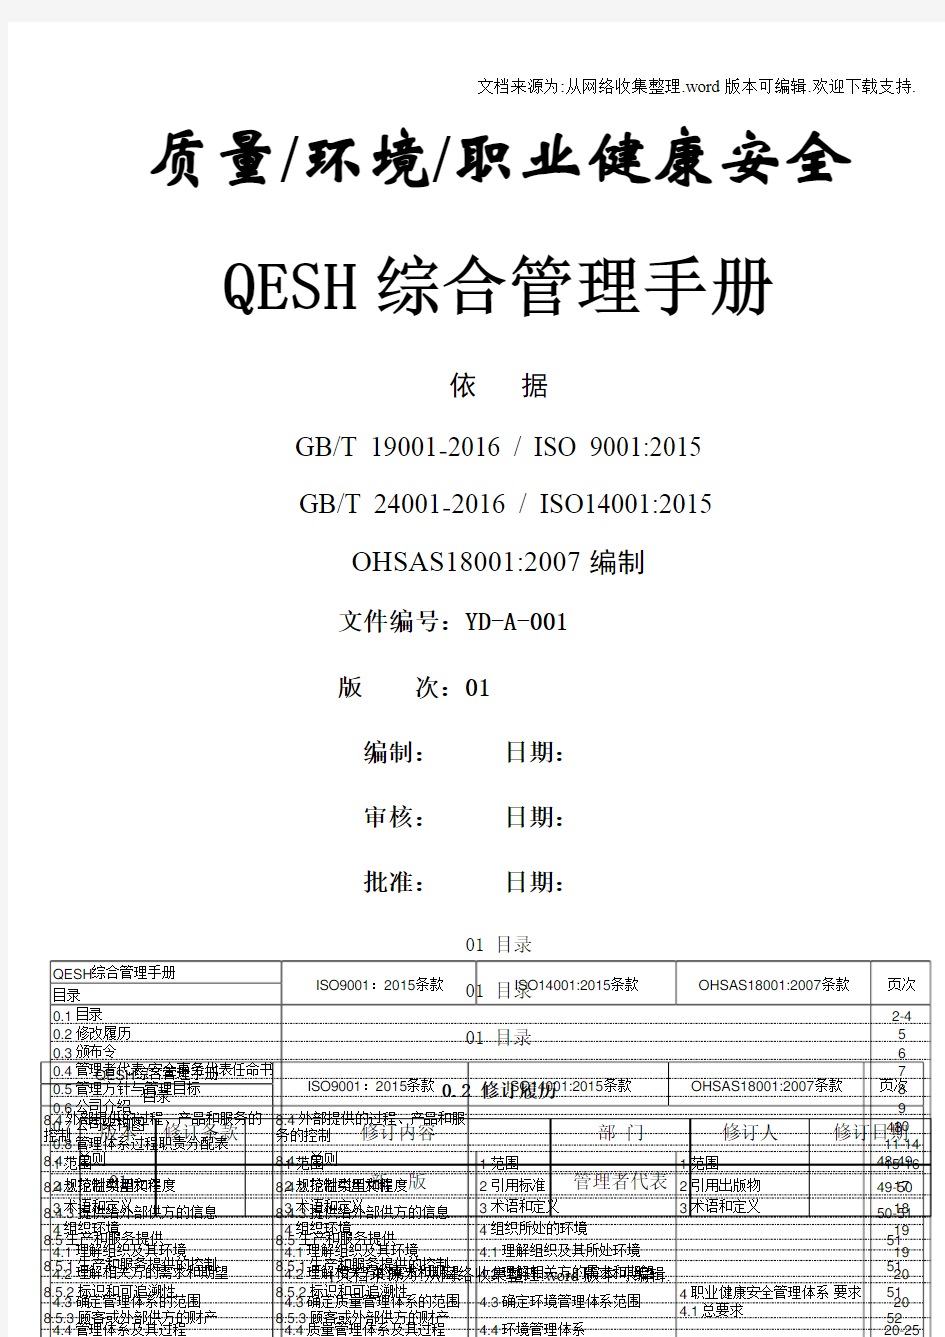 QESH综合管理手册170906新版通用